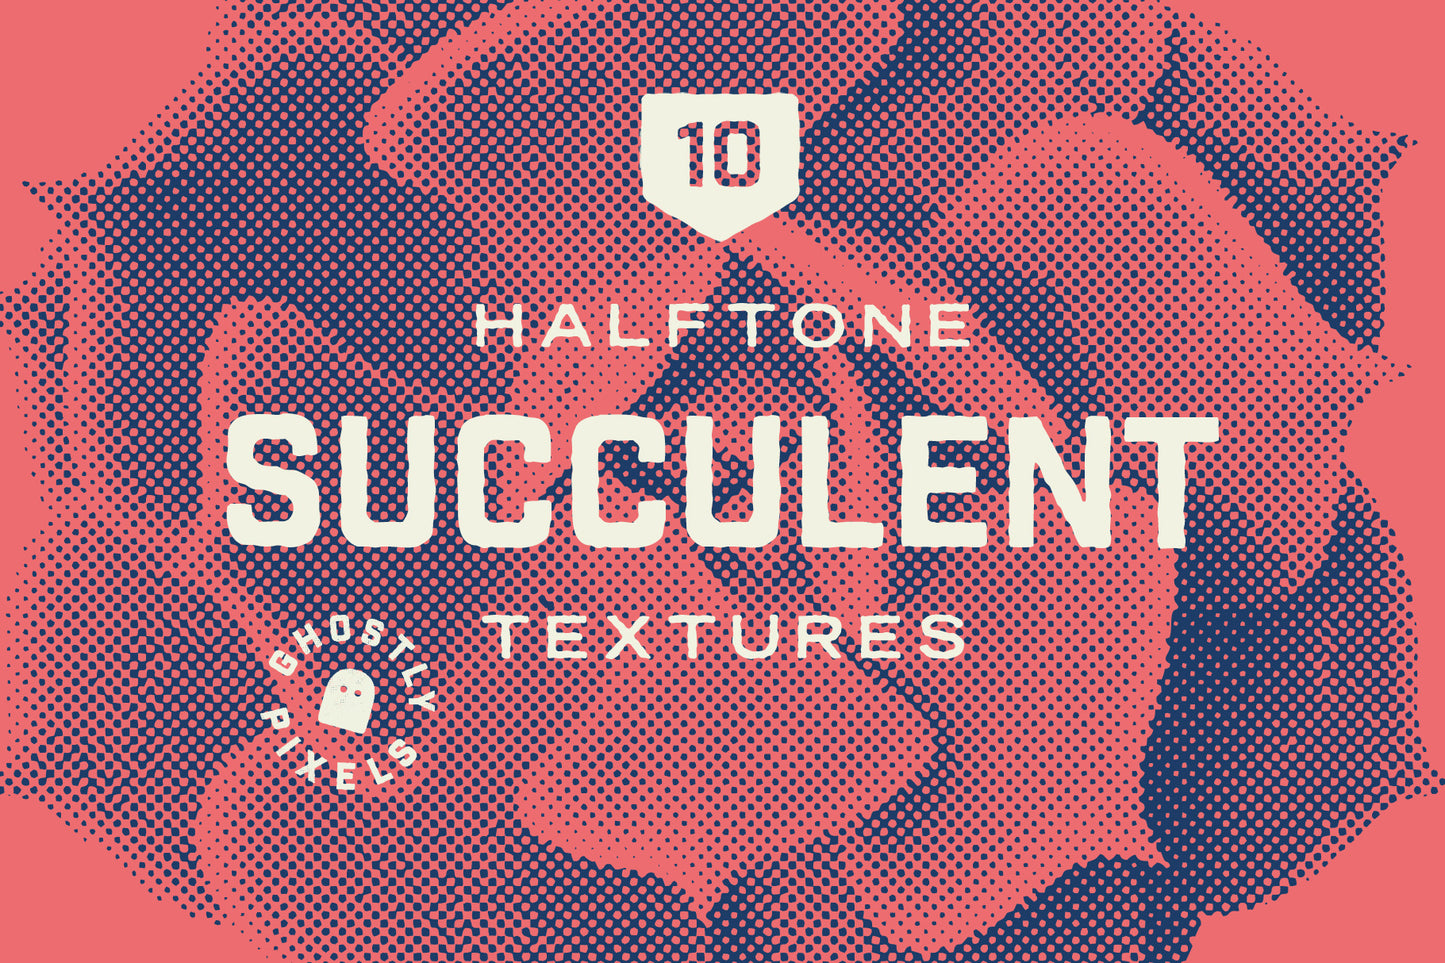 Halftone succulent textures